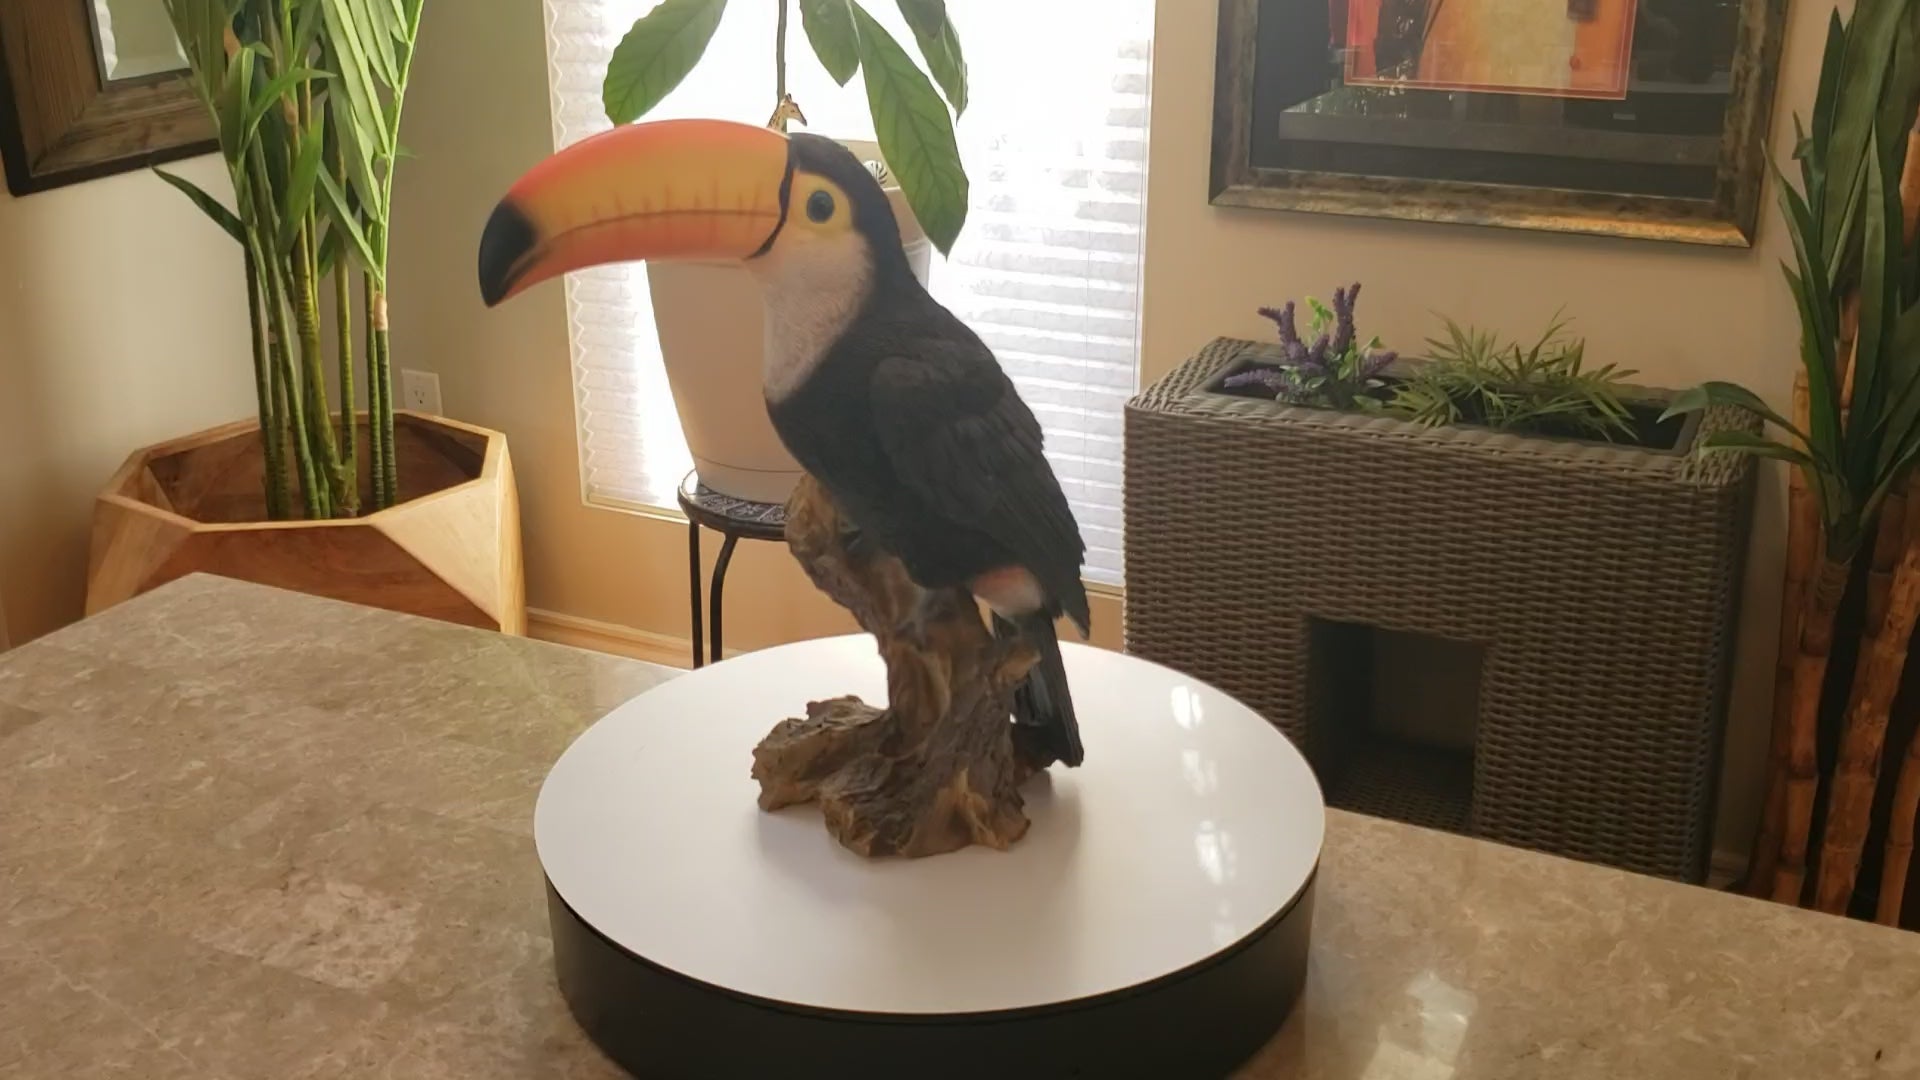 Auction for sale toucan bird statue